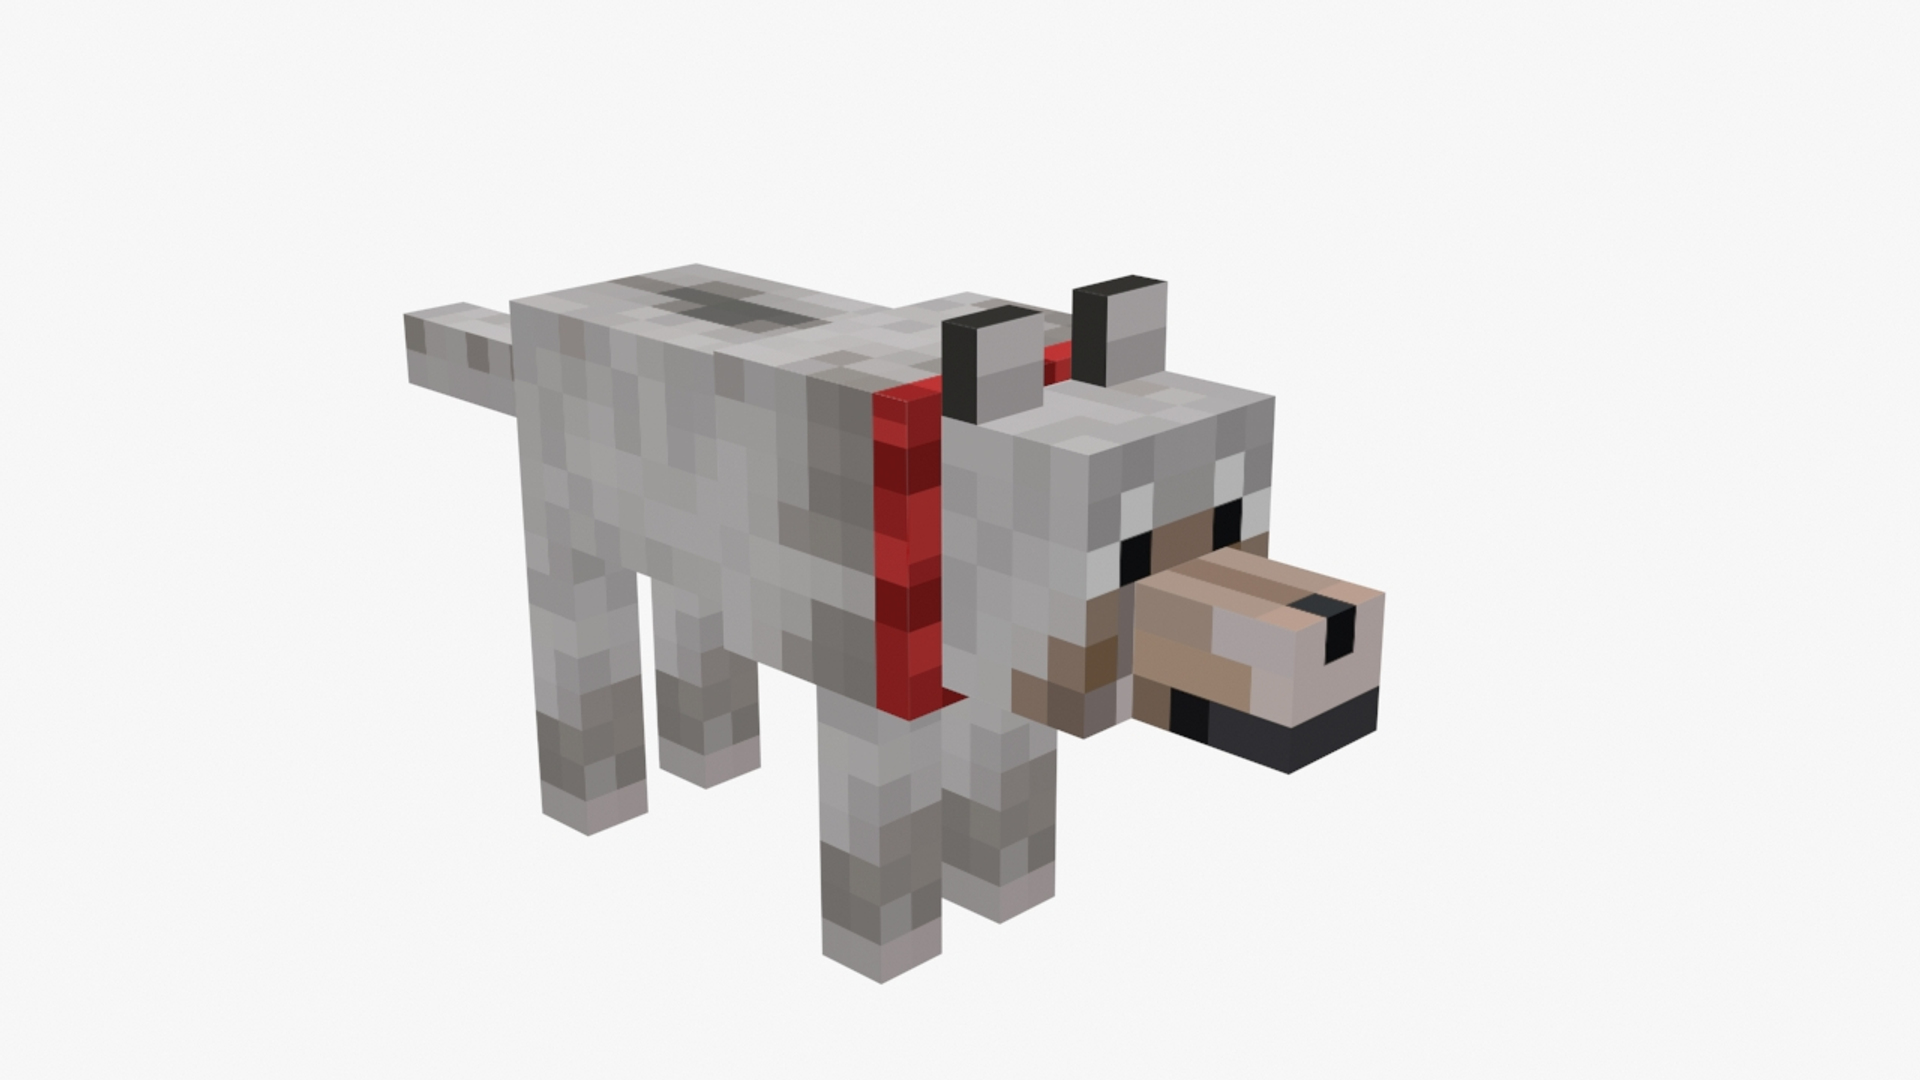 Free Minecraft Wolf 3d Model